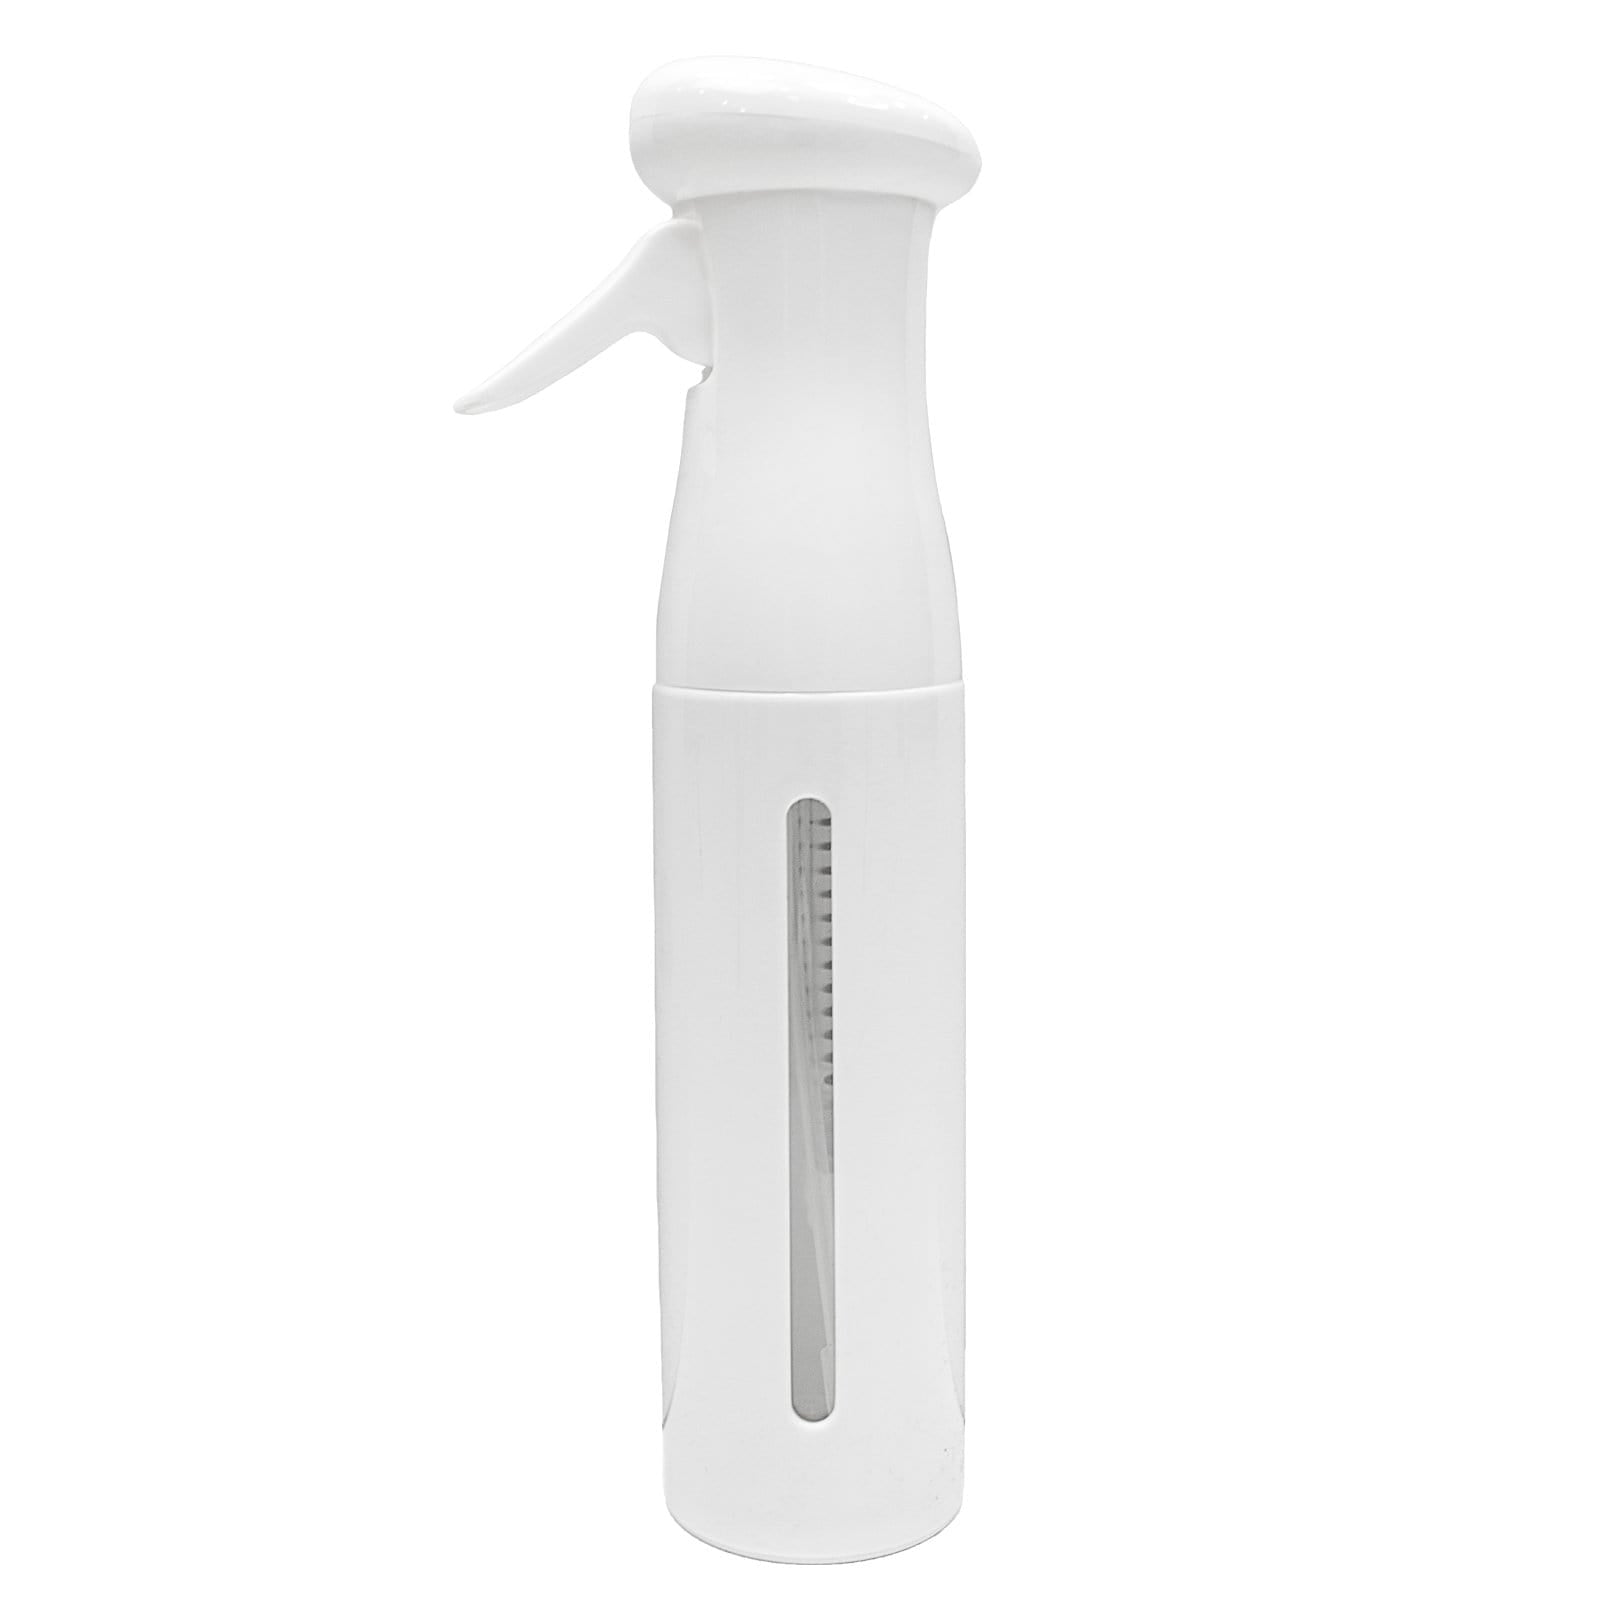 Salon Care Sheer Mist Trigger Spray Bottle 1.0000 Os